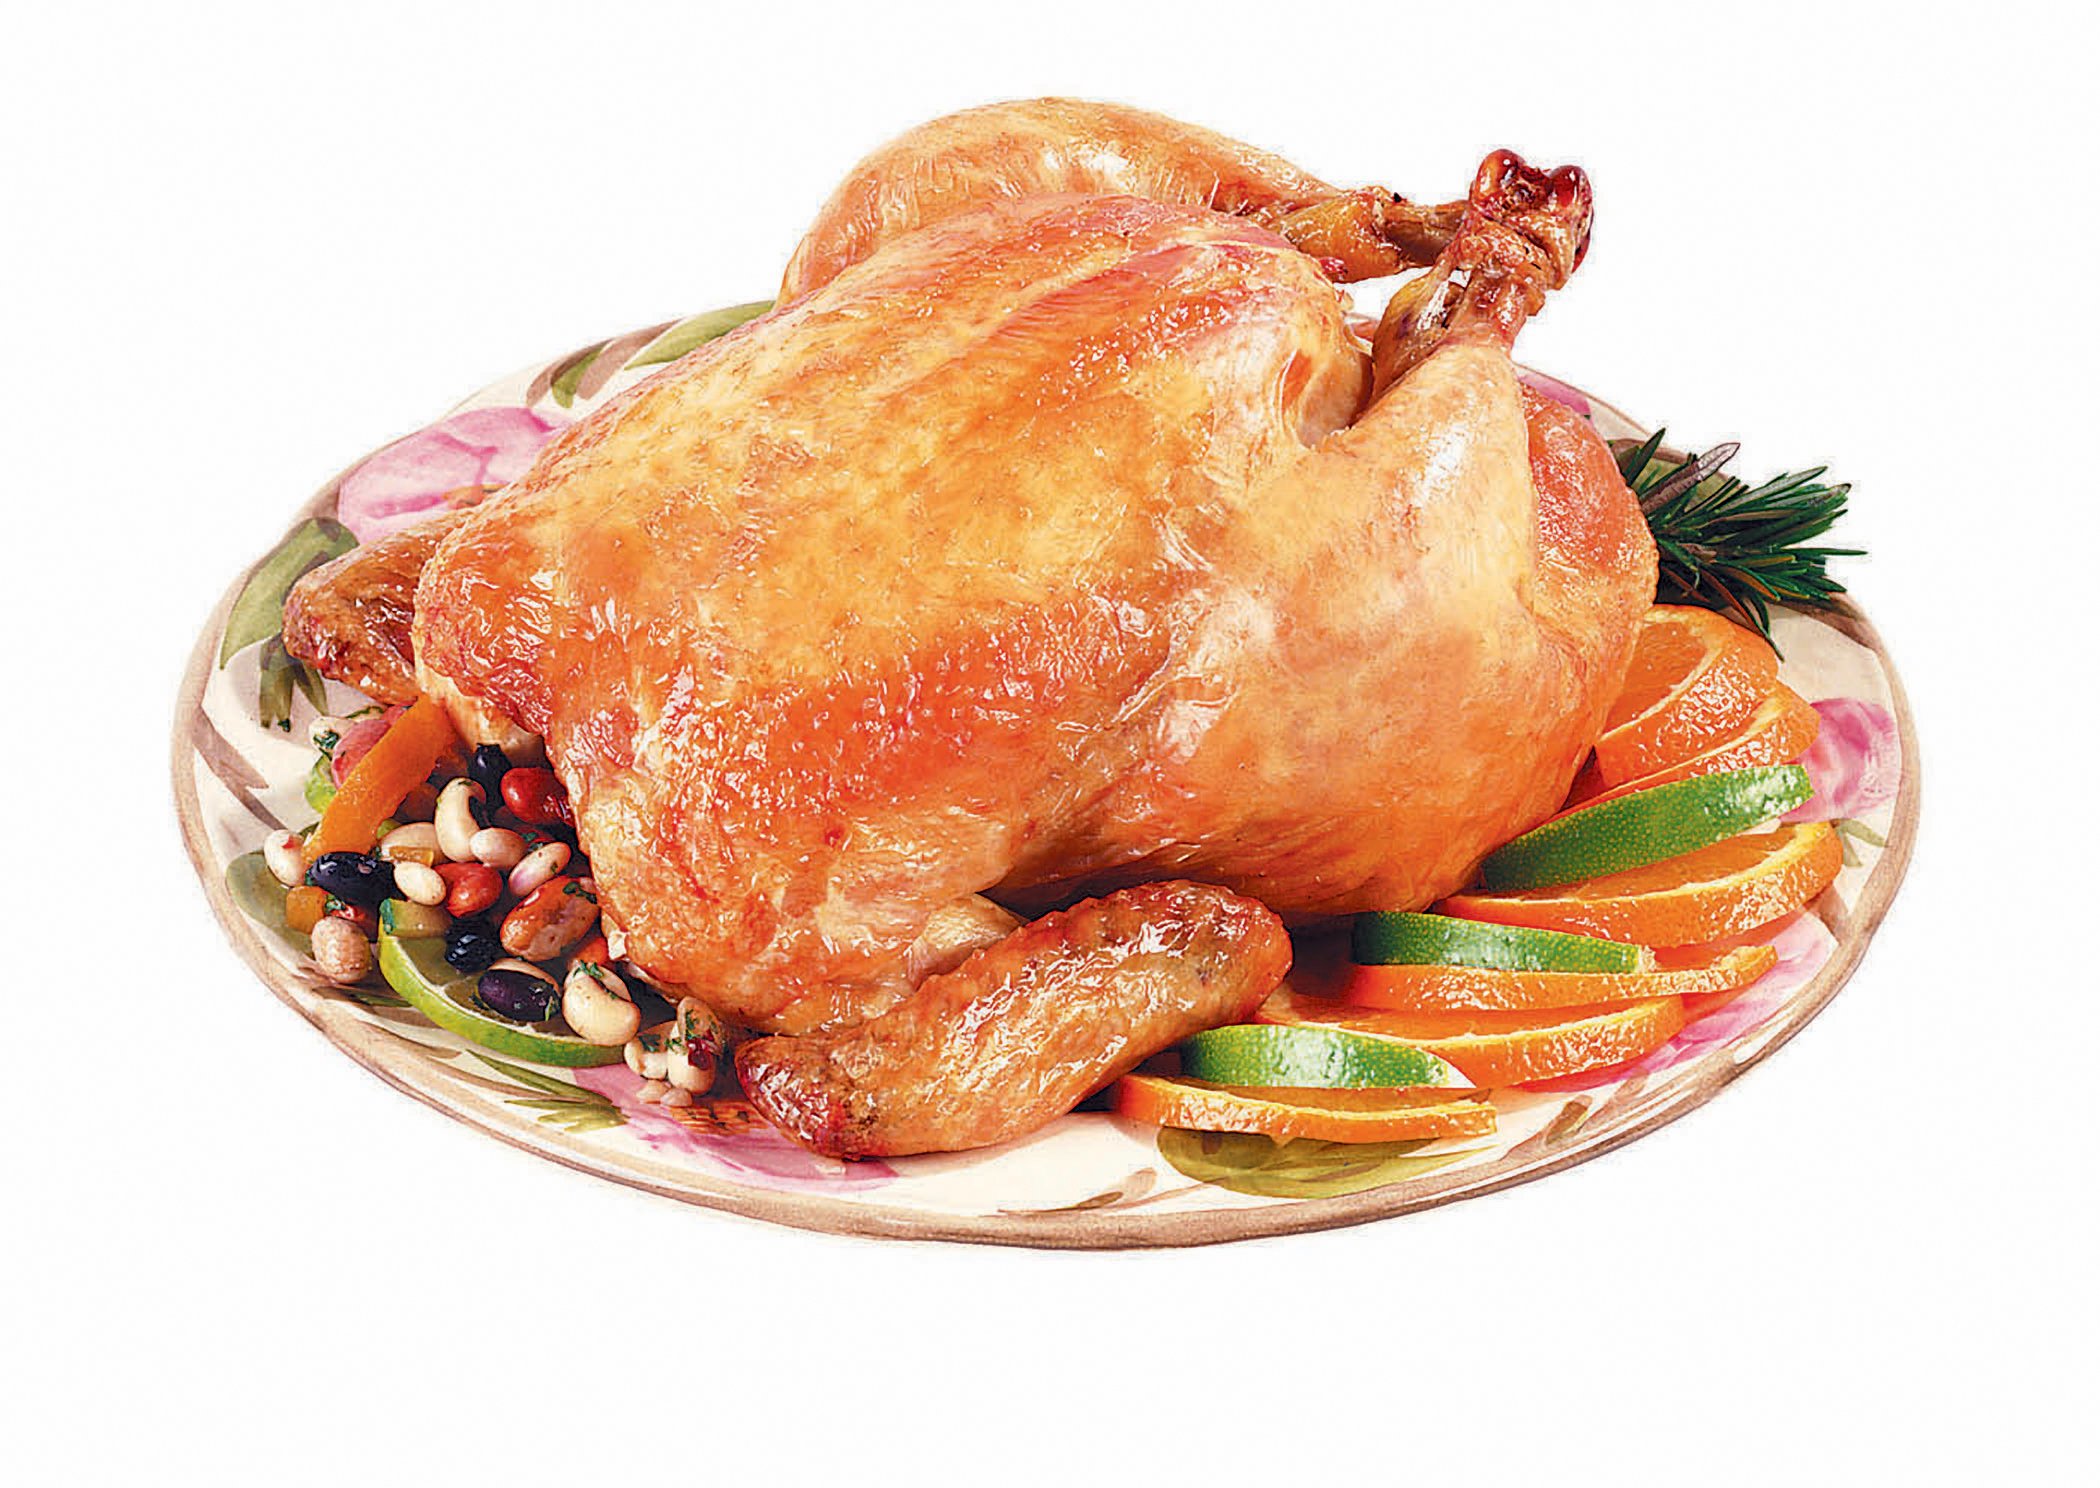 Whole Chicken Rotisserie - Prepared Food Photos, Inc.